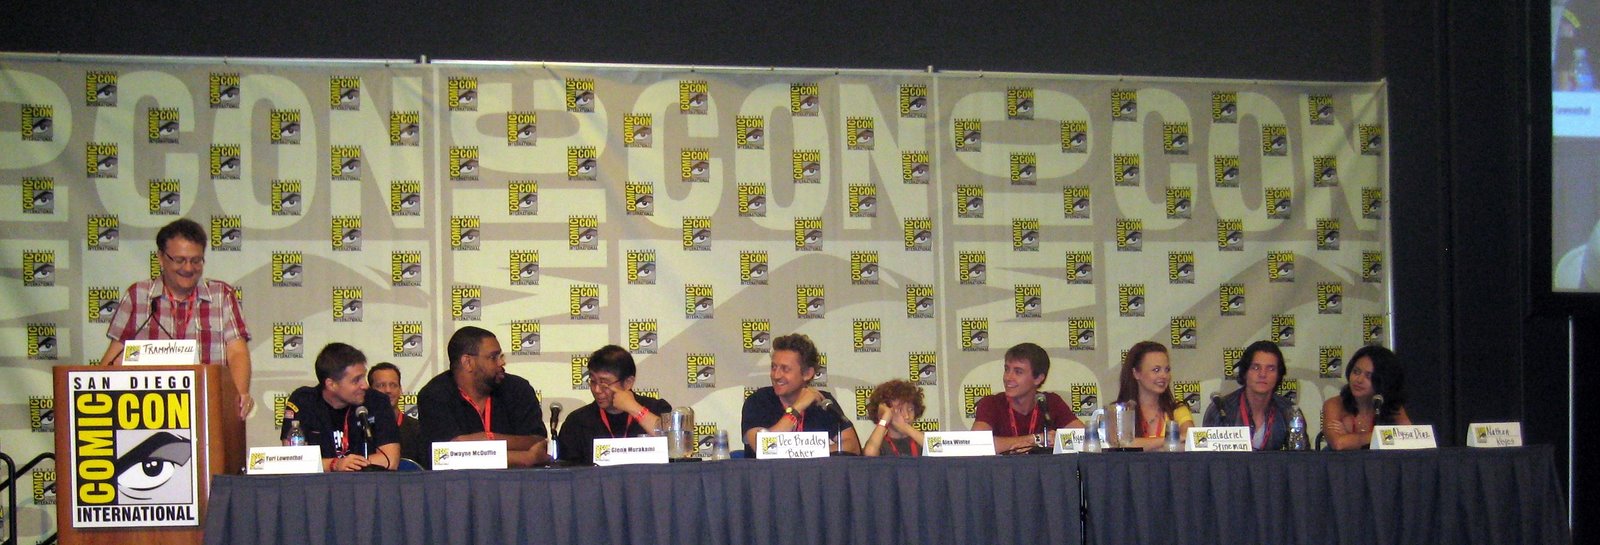 Ben 10 ComicCon panel director Alex Winter and cast